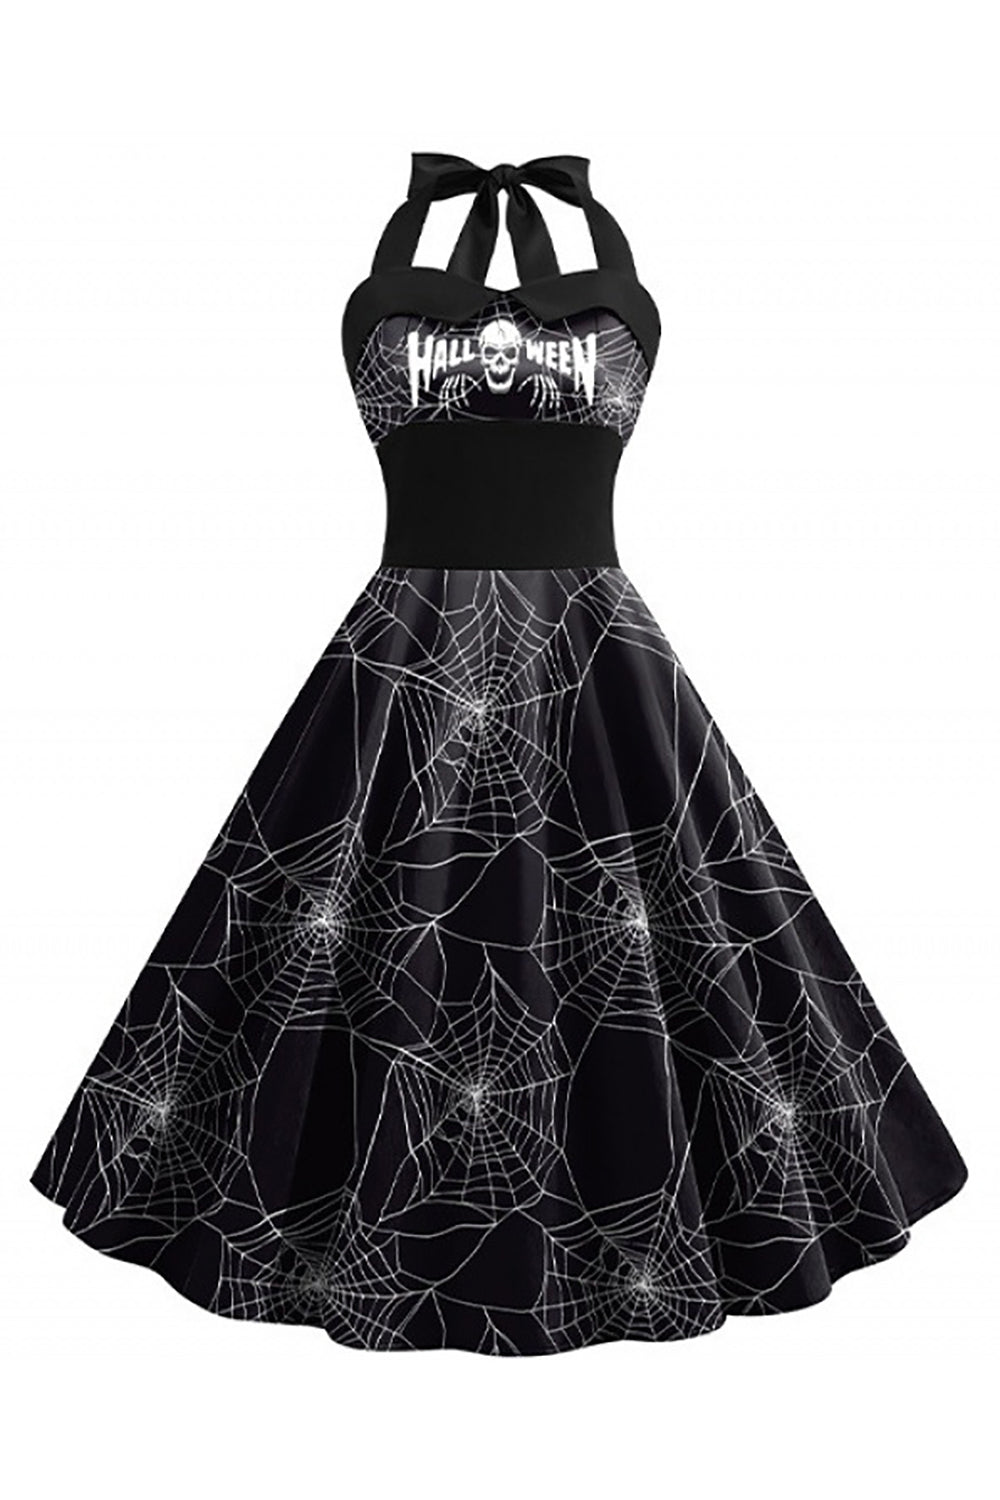 Halloween Pattern Black Halter Neck Vintage Dress